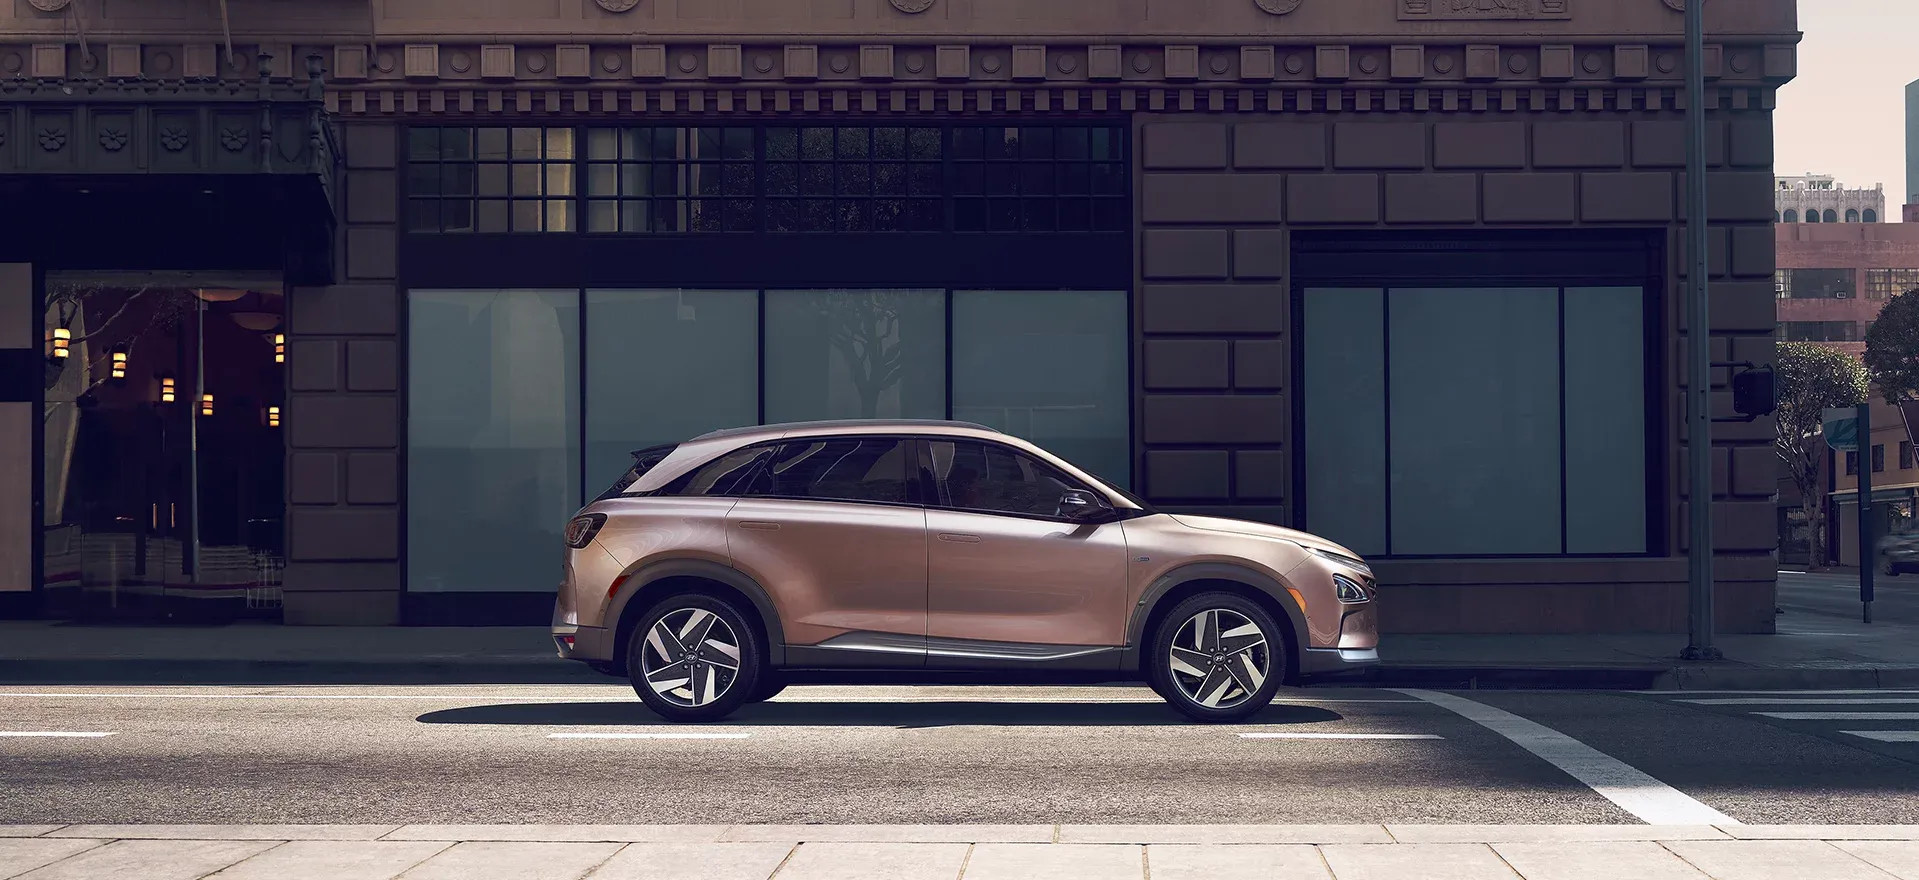 Hyundai Nexo: A Glimpse into the Hydrogen-Powered Future